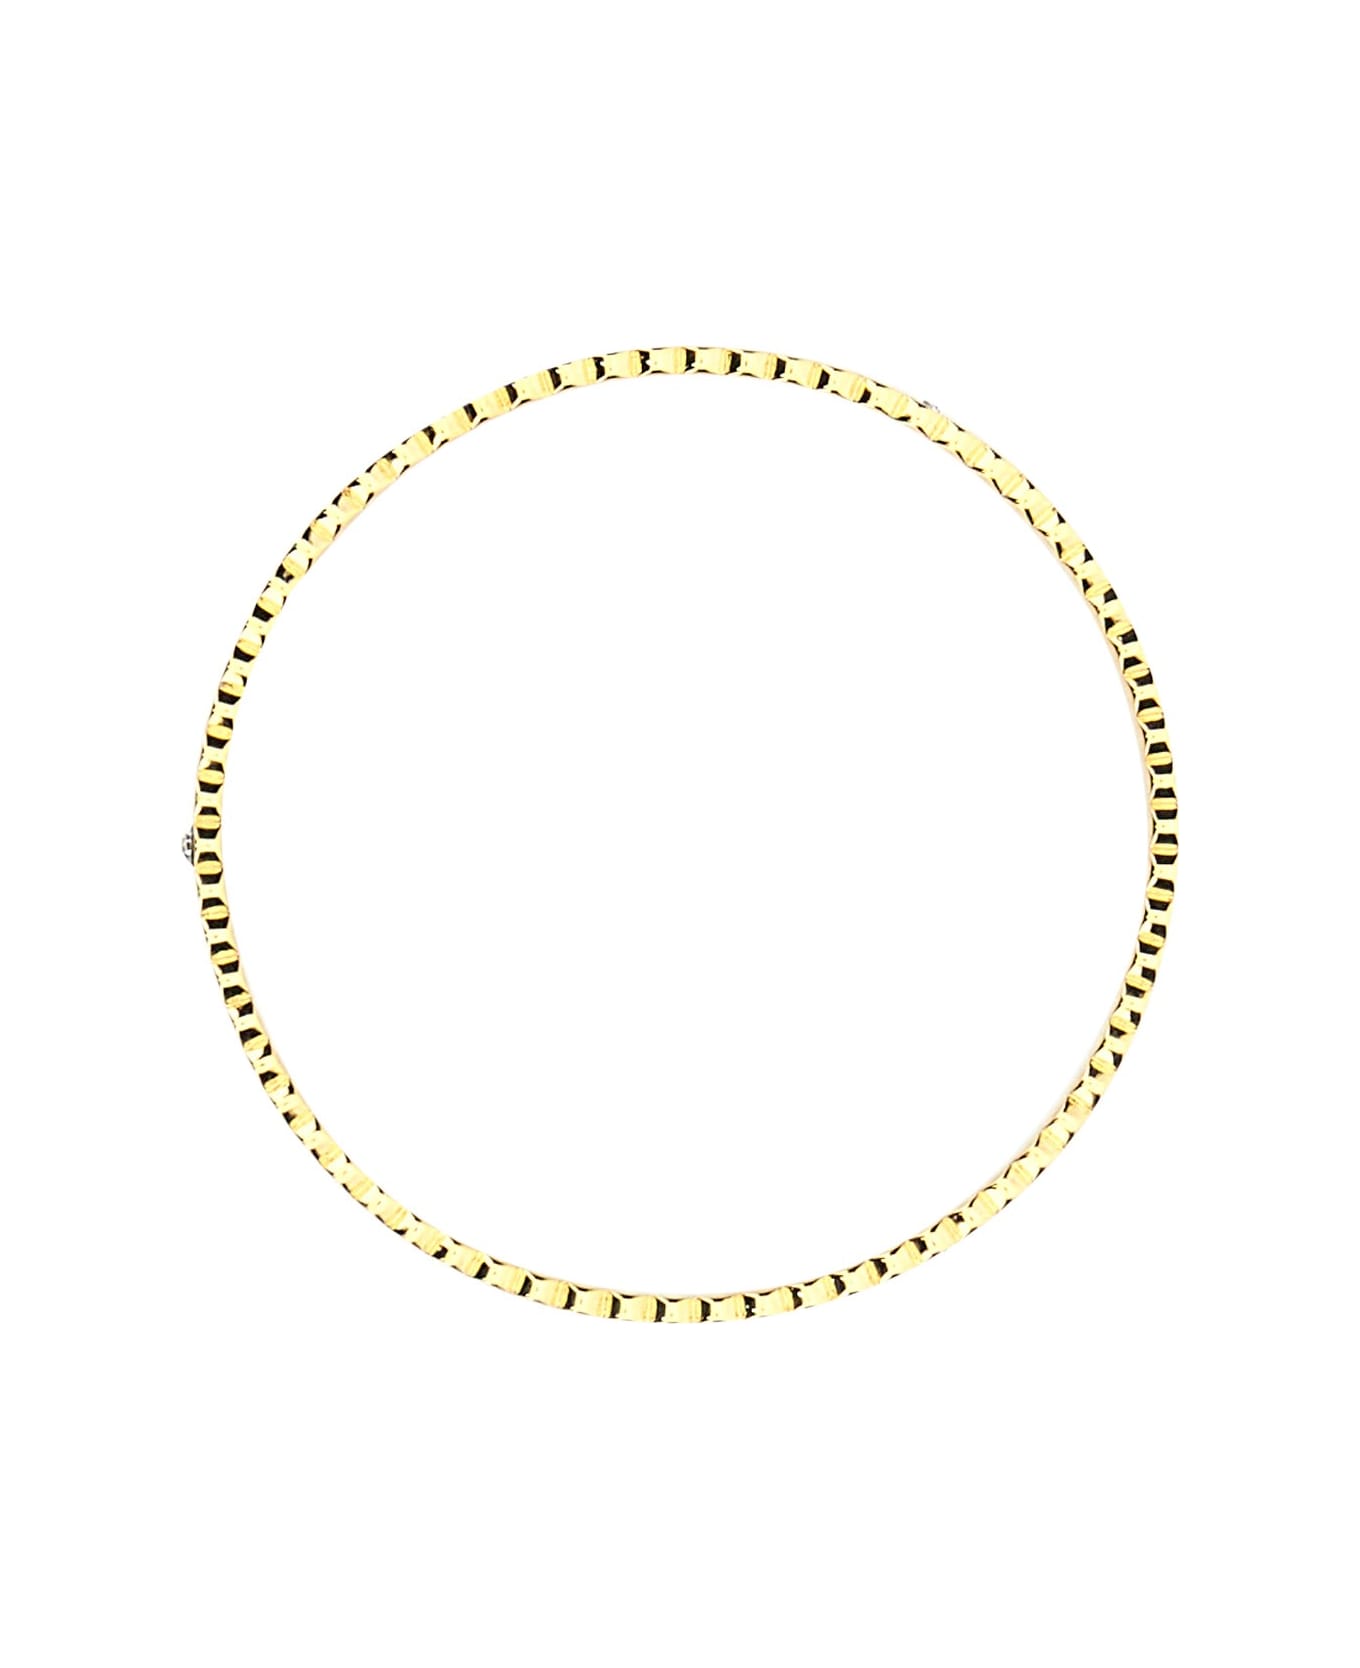 Marc Jacobs The Medallion Scalloped Logo Detailed Bracelet - NERO